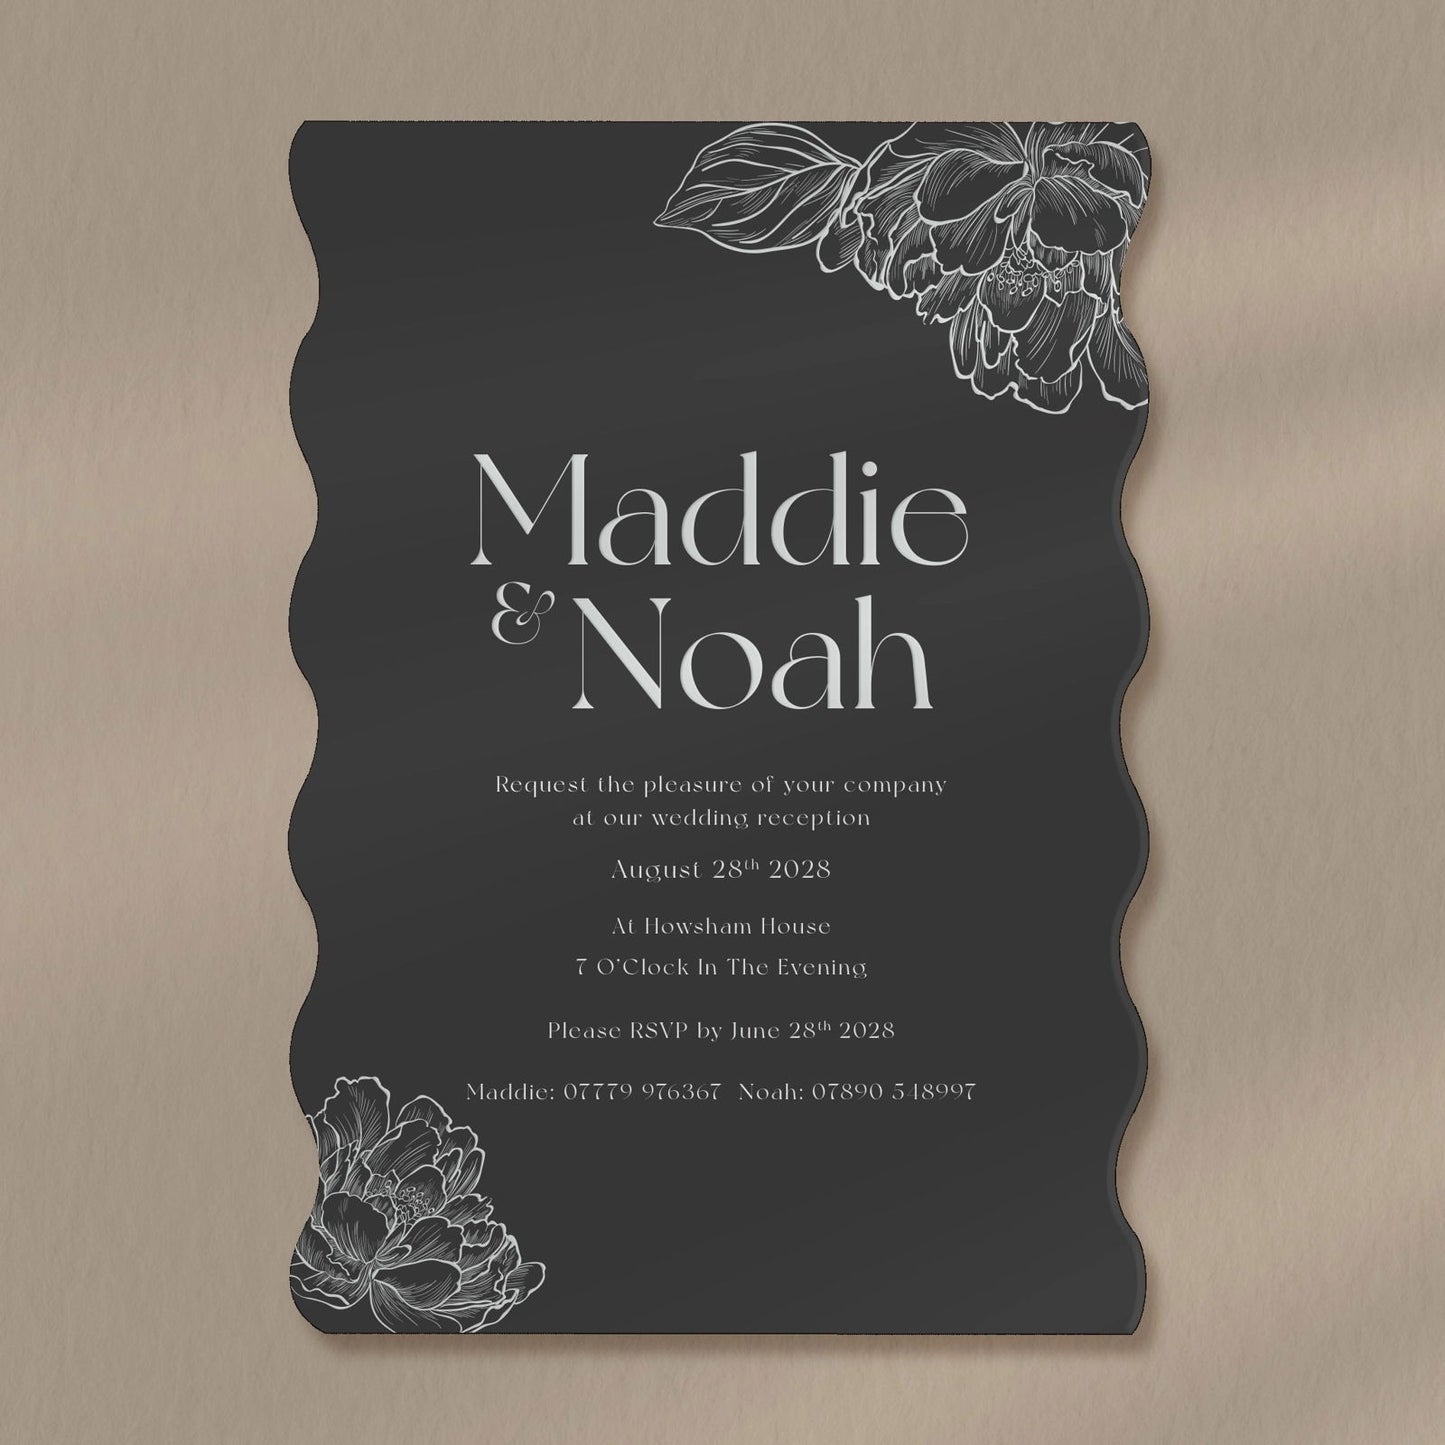 Maddie Evening Invitation  Ivy and Gold Wedding Stationery   